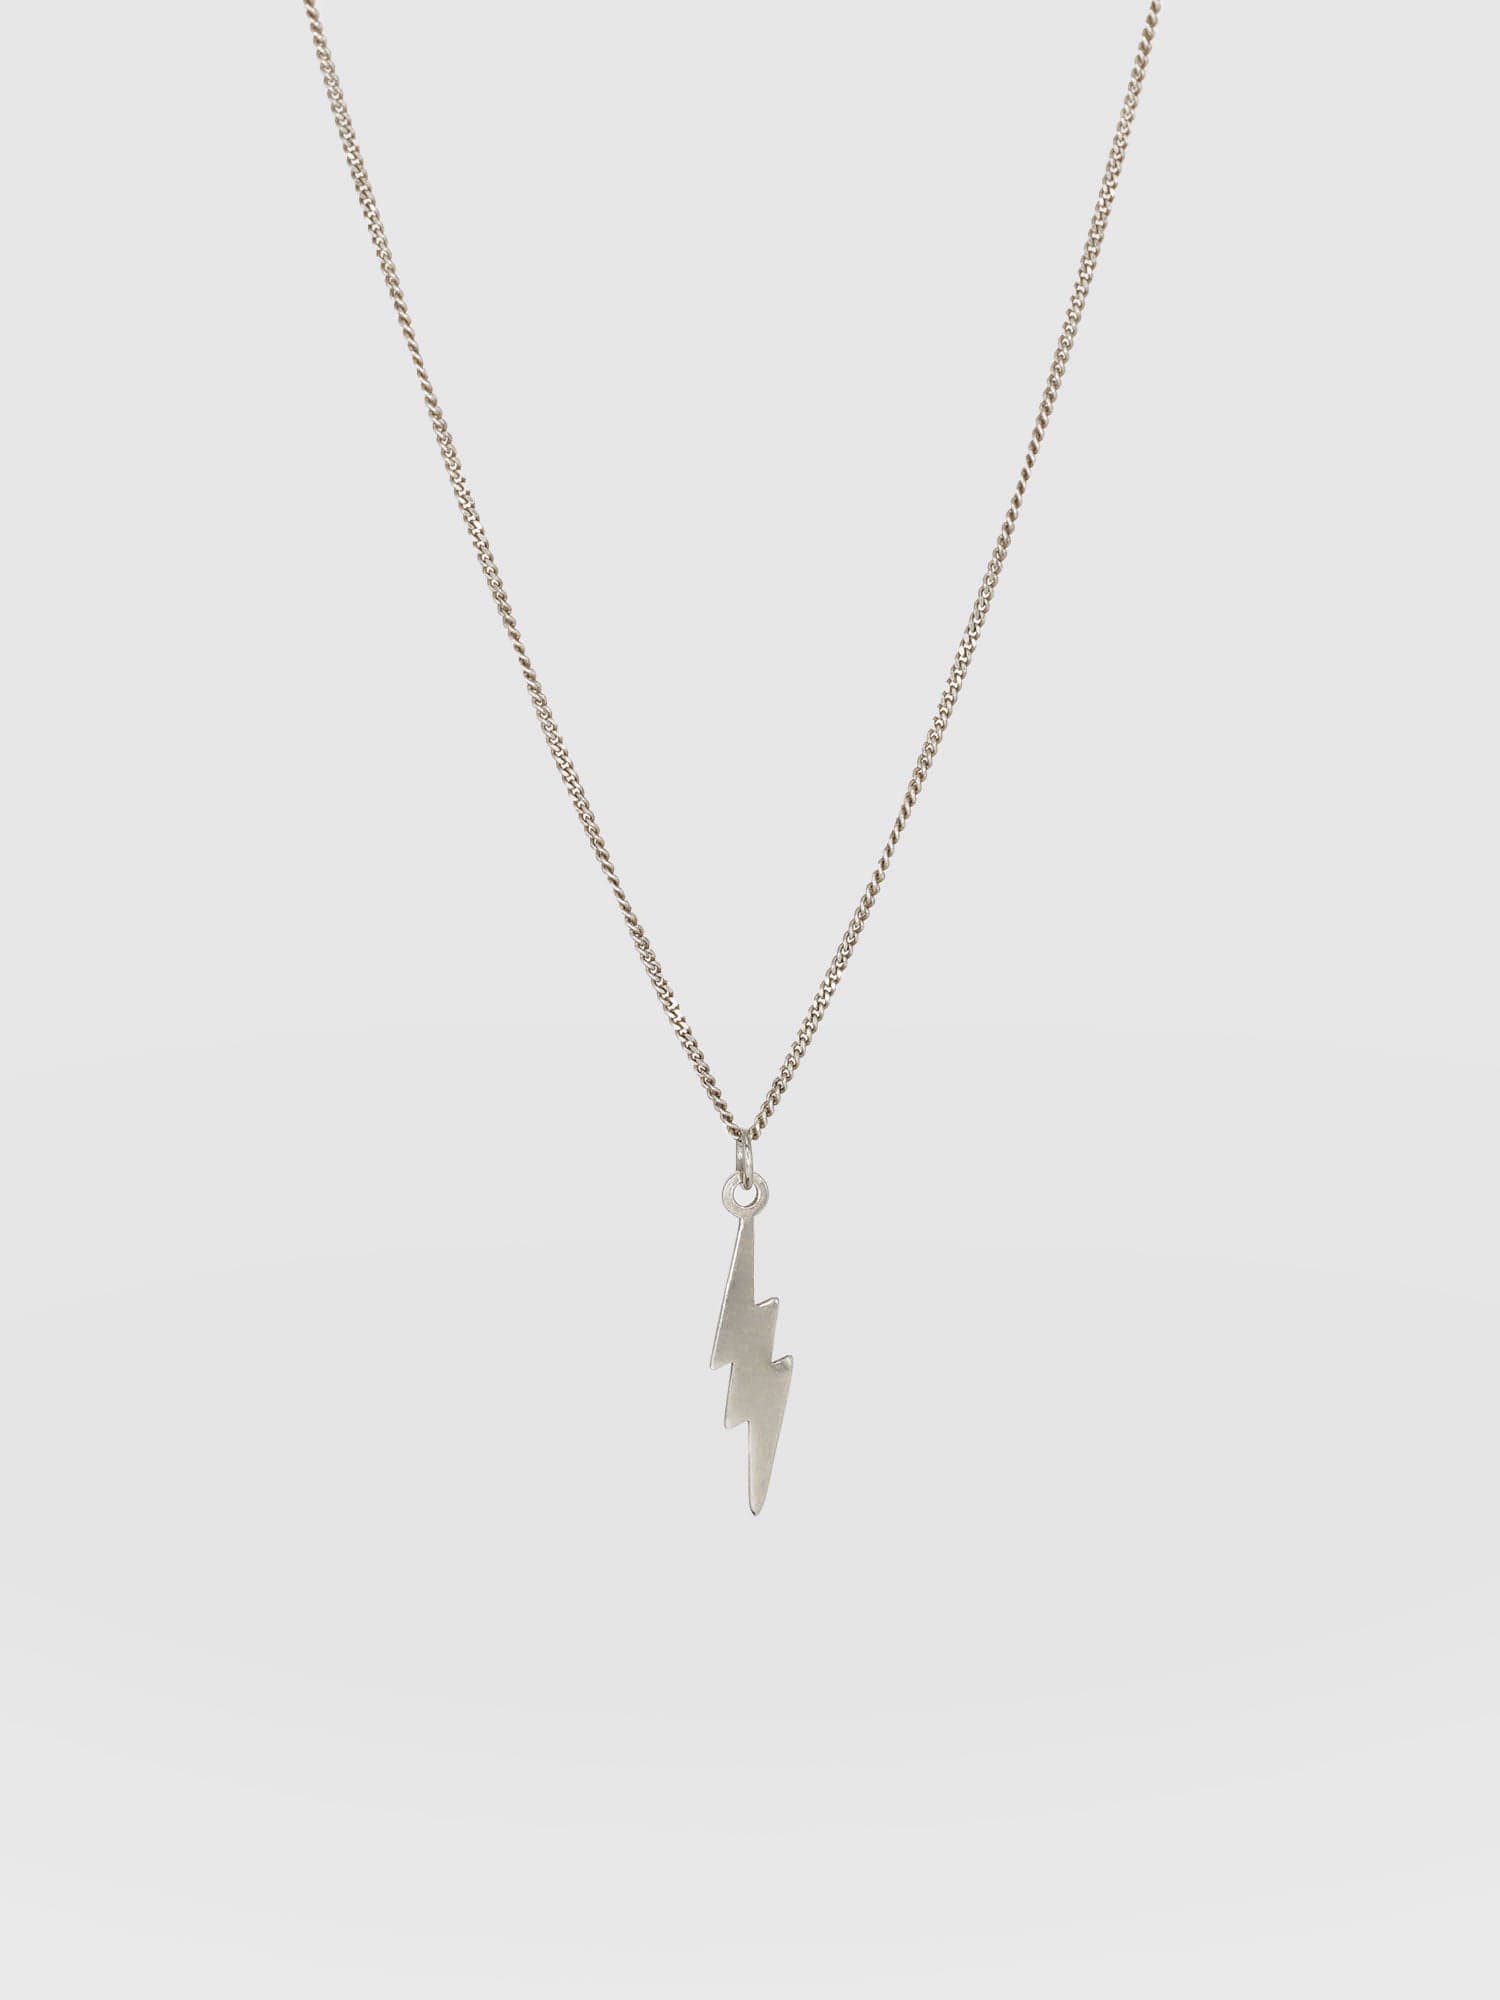 Lightning Bolt Necklace in Sterling Silver - FashionJunkie4Life